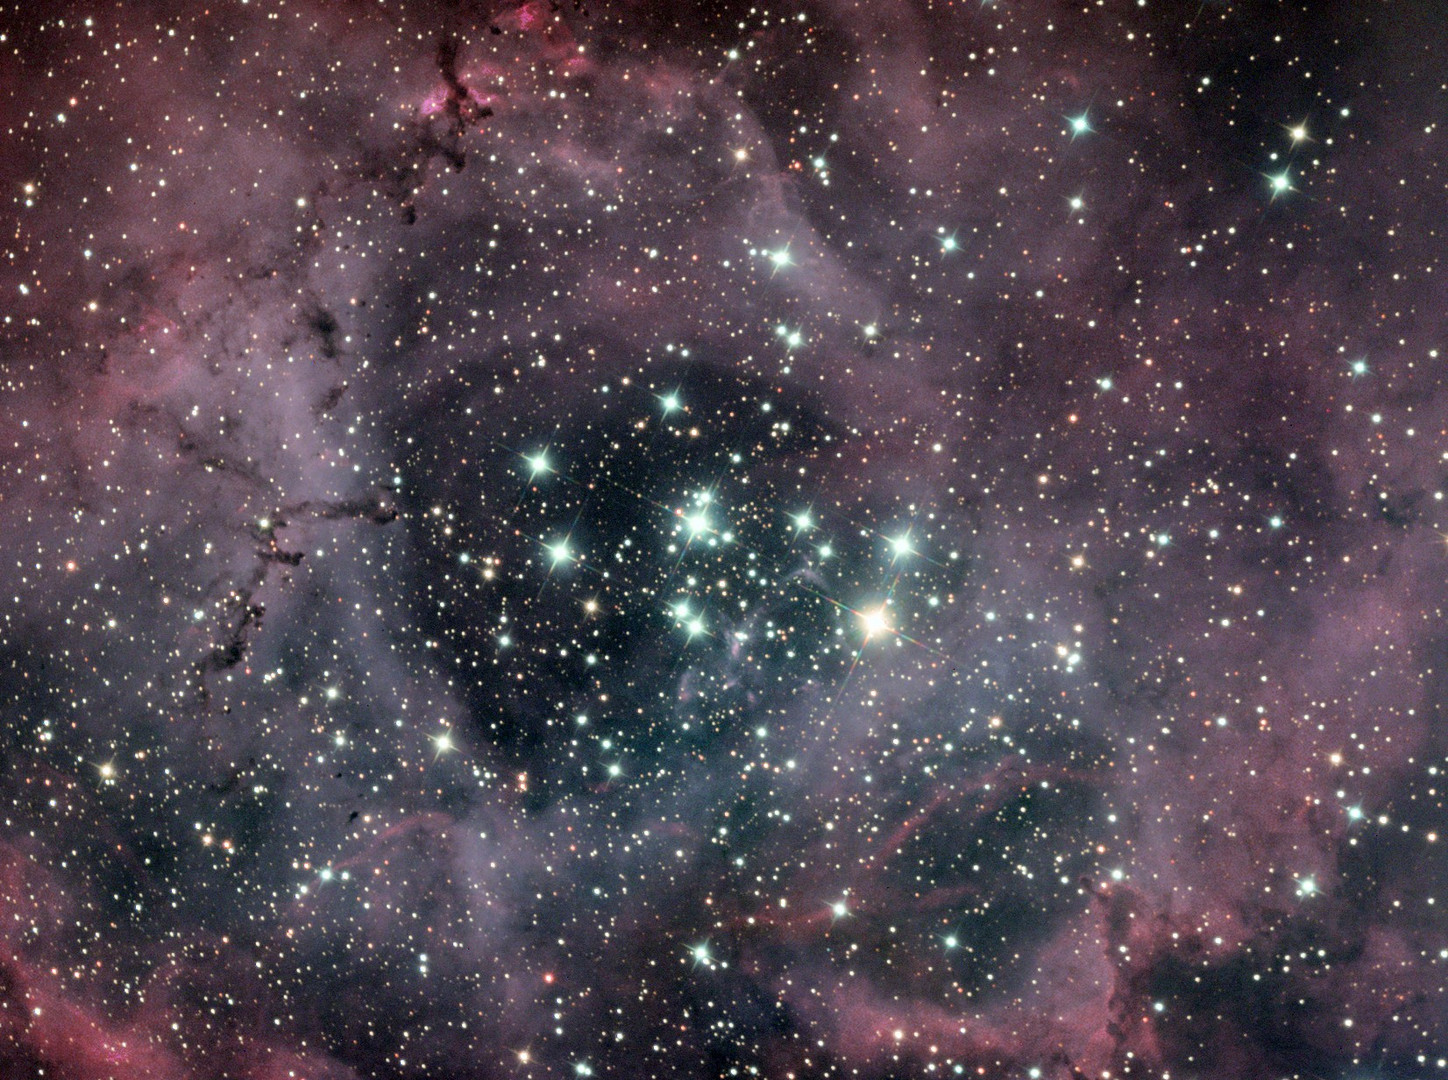 Der offene Strernhaufen NGC 2244 eingebettet in den Rosettennebel NGC 2237,2238,2239,2246